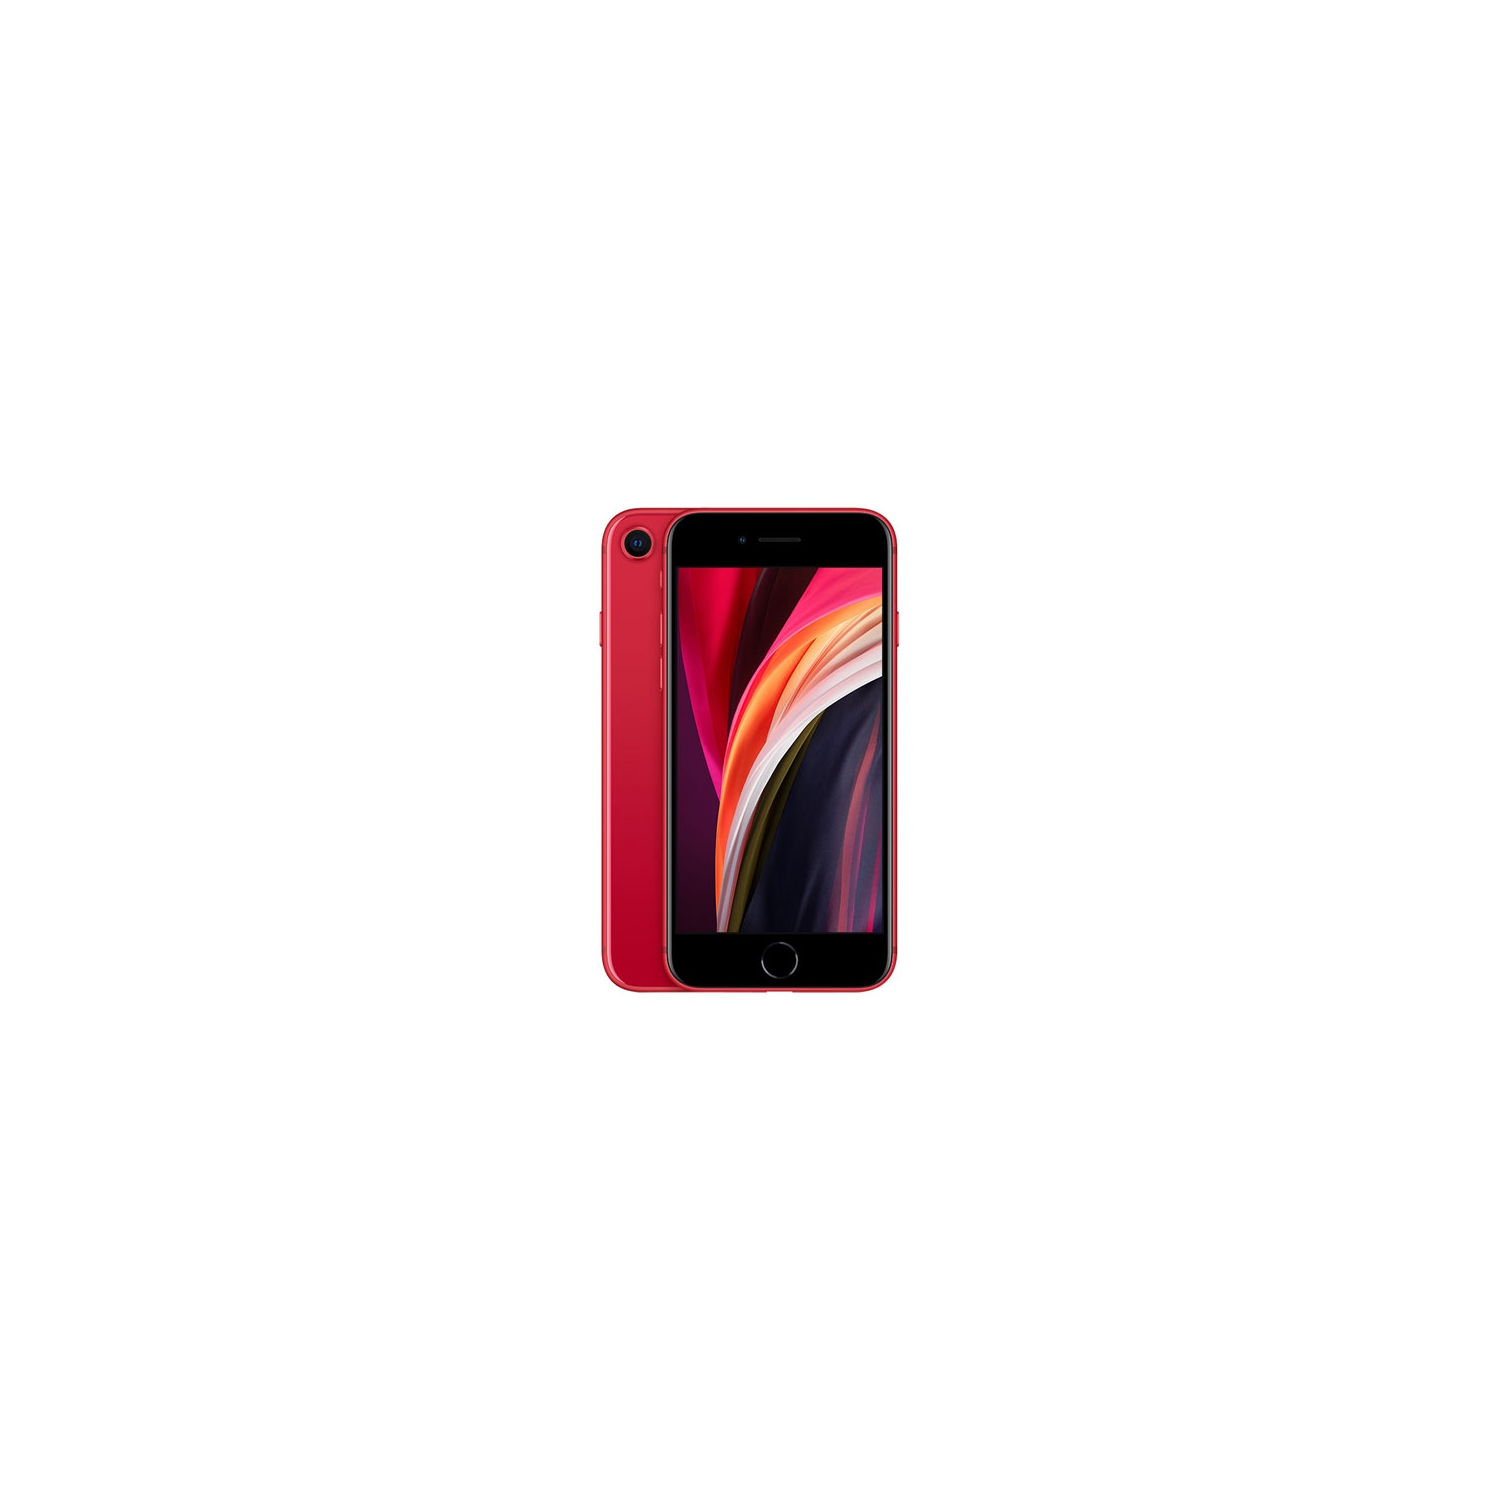 Refurbished (Excellent) - Apple iPhone SE (2nd generation) 64GB Smartphone - Red - Unlocked - Certified Refurbished